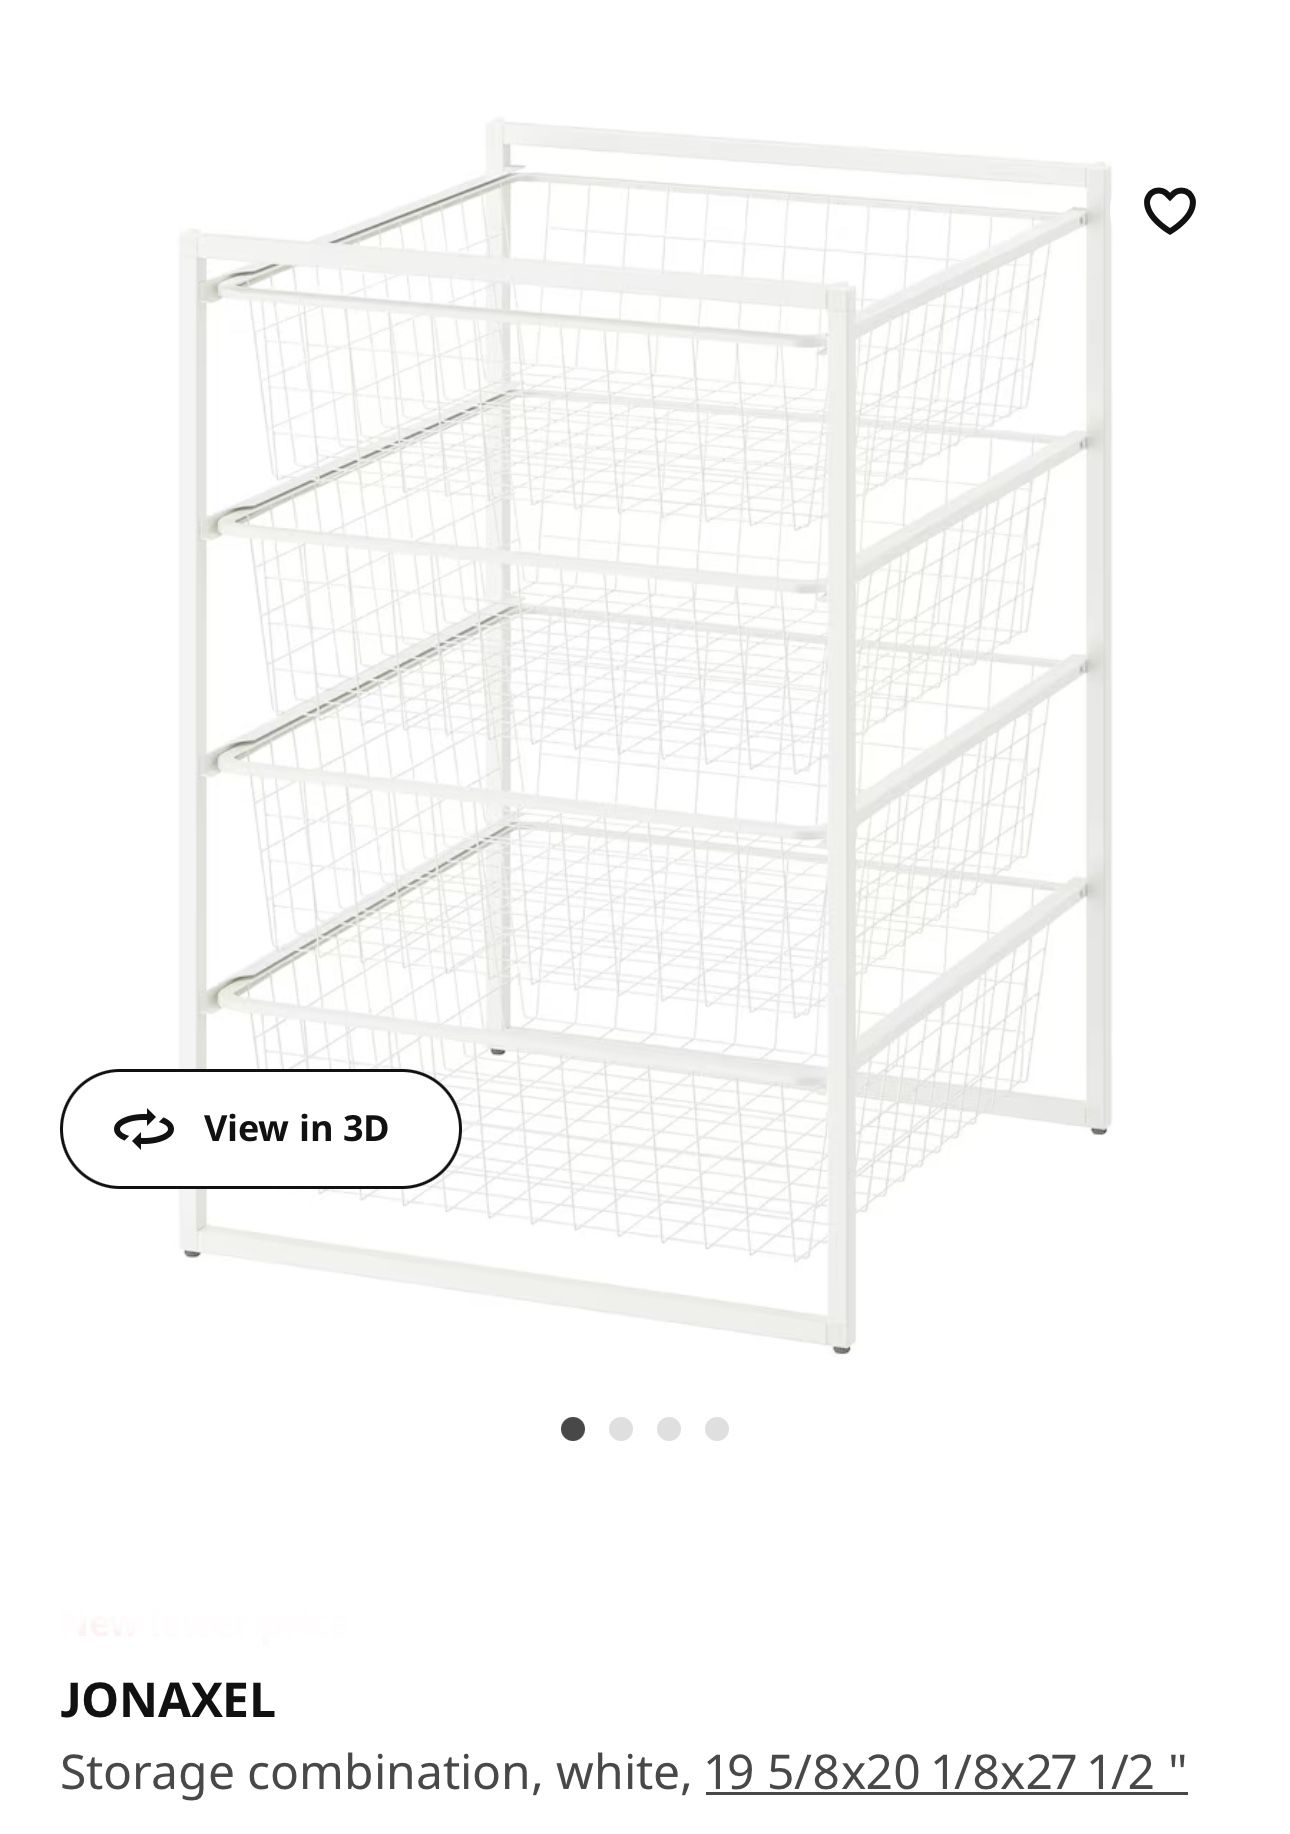 IKEA Jonaxel Storage Drawers